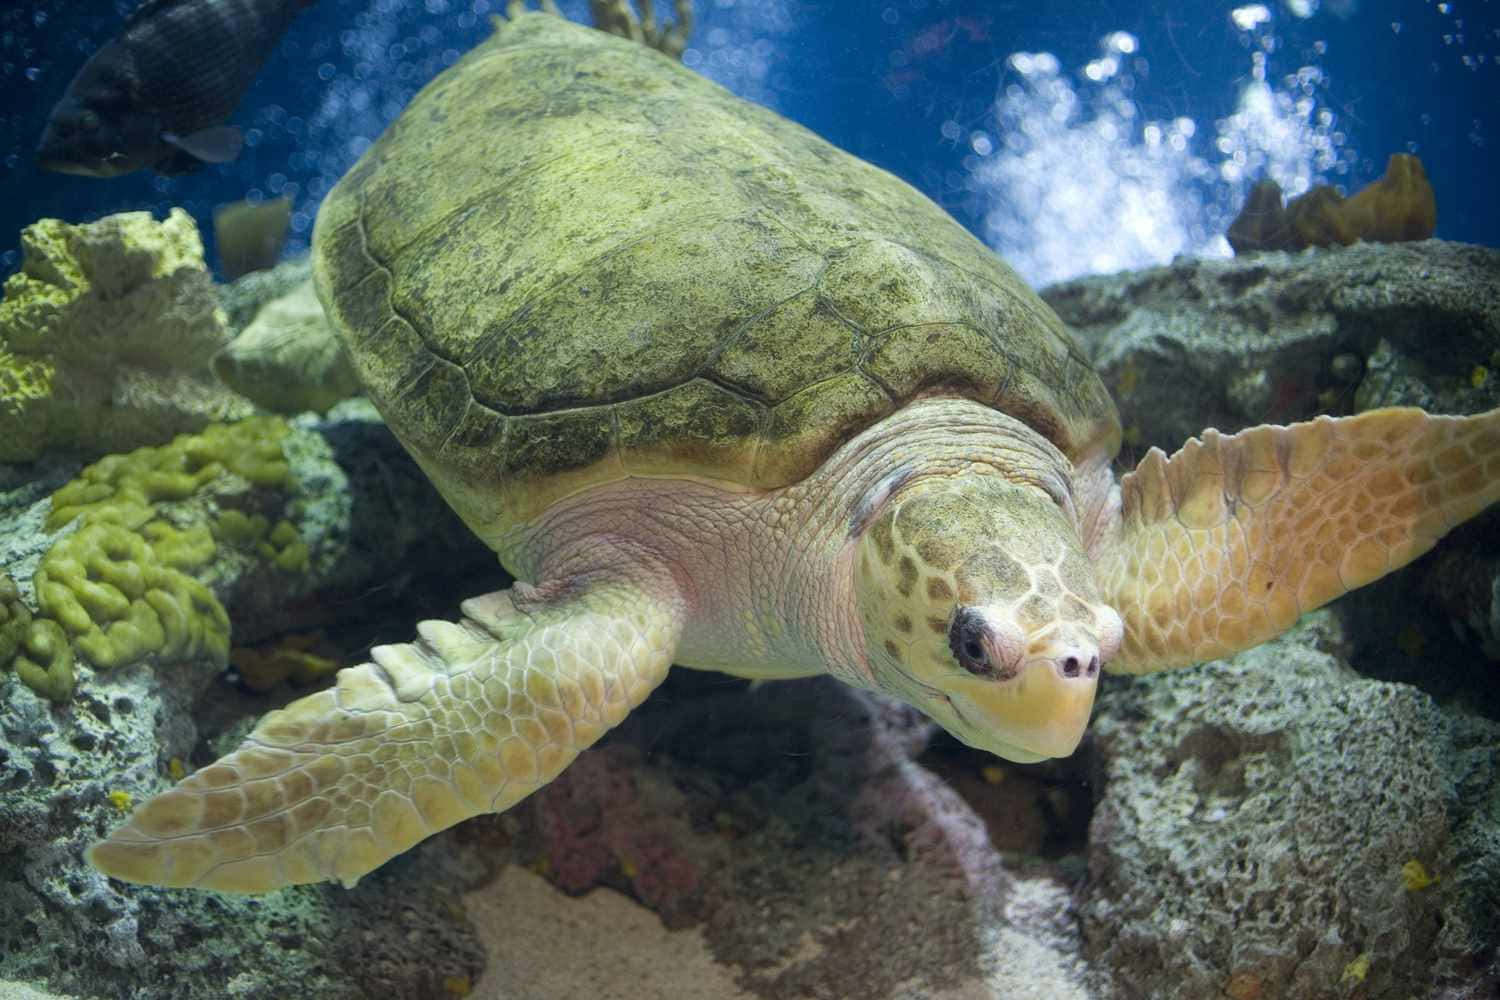 Kemps Ridley Sea Turtle Swimming Wallpaper